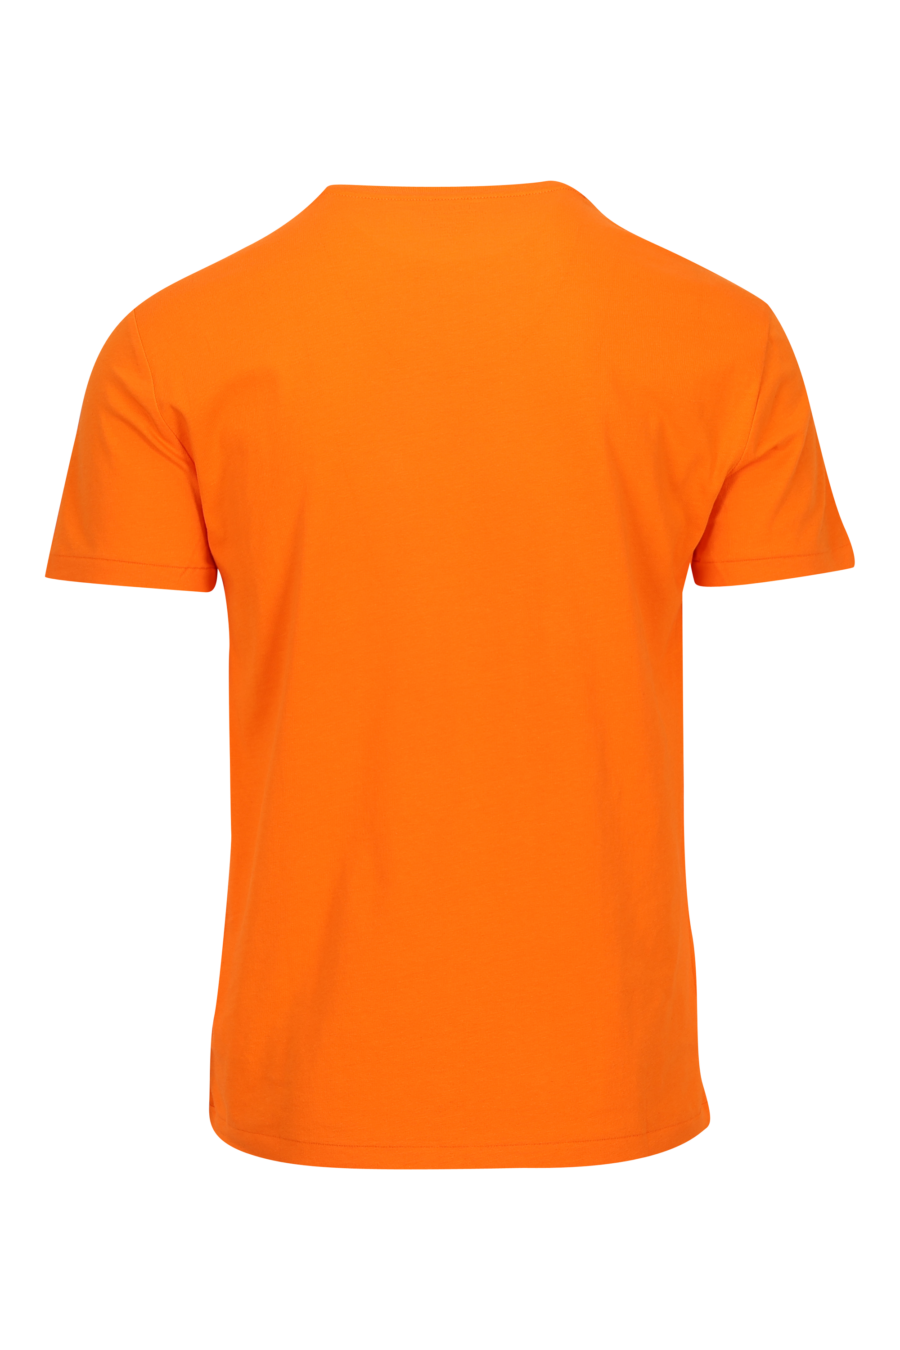 Camiseta naranja y verde con minilogo "polo" - 3616536280914 1